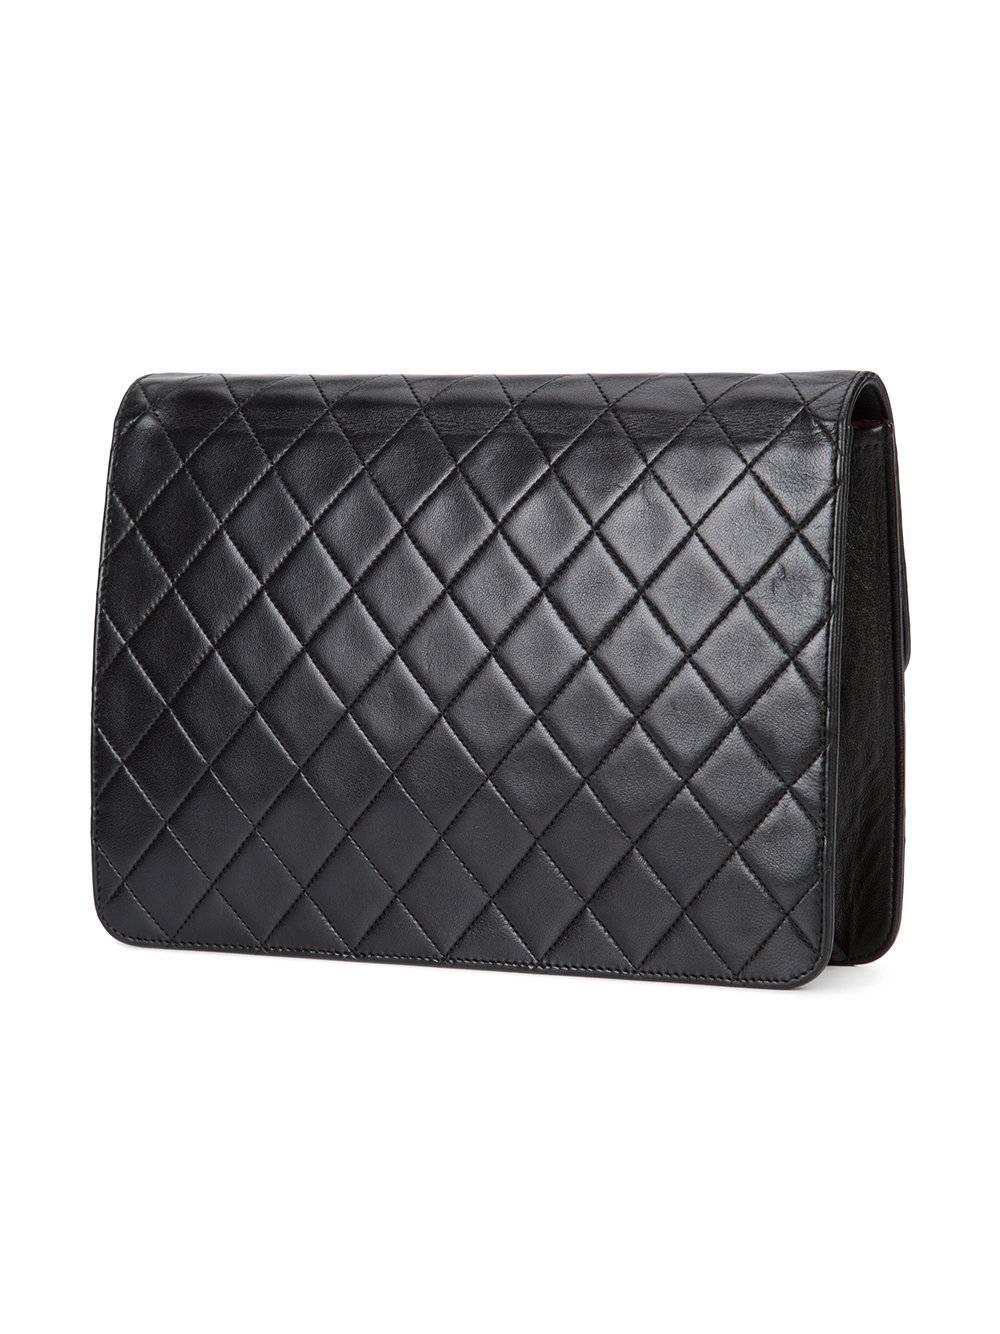 Women's Chanel Vintage Black Lambskin Gold 2 in 1 Evening Clutch Flap Shoulder Bag